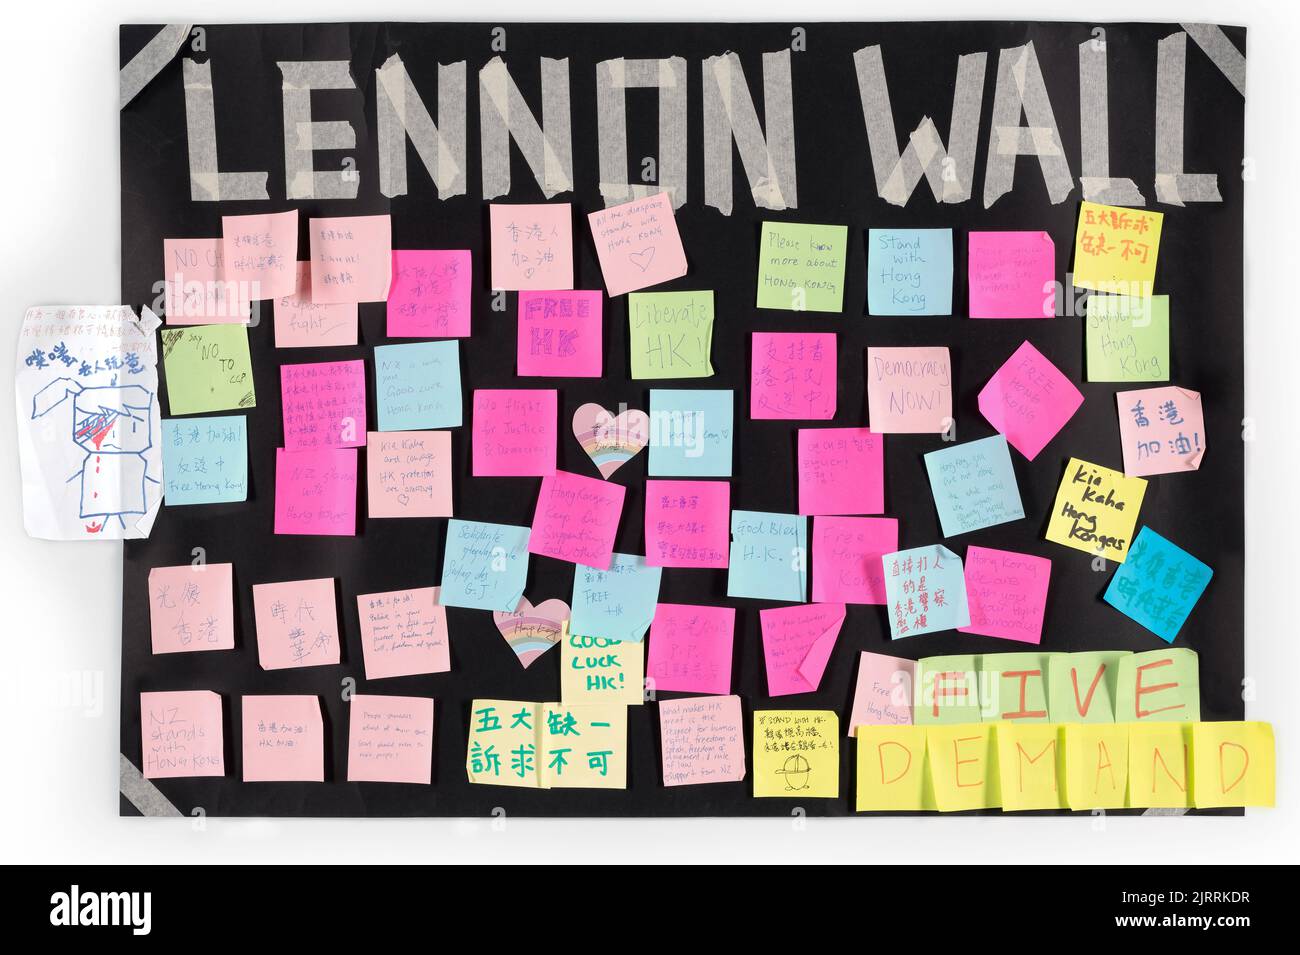 Lennon Wall (transportabel), Solidaritätsprotest Hongkong, Auckland 2019., 2019, Auckland, von Anonymous. Geschenk von We are Kiwi Hong Kongers, 2021. CC 0. Stockfoto